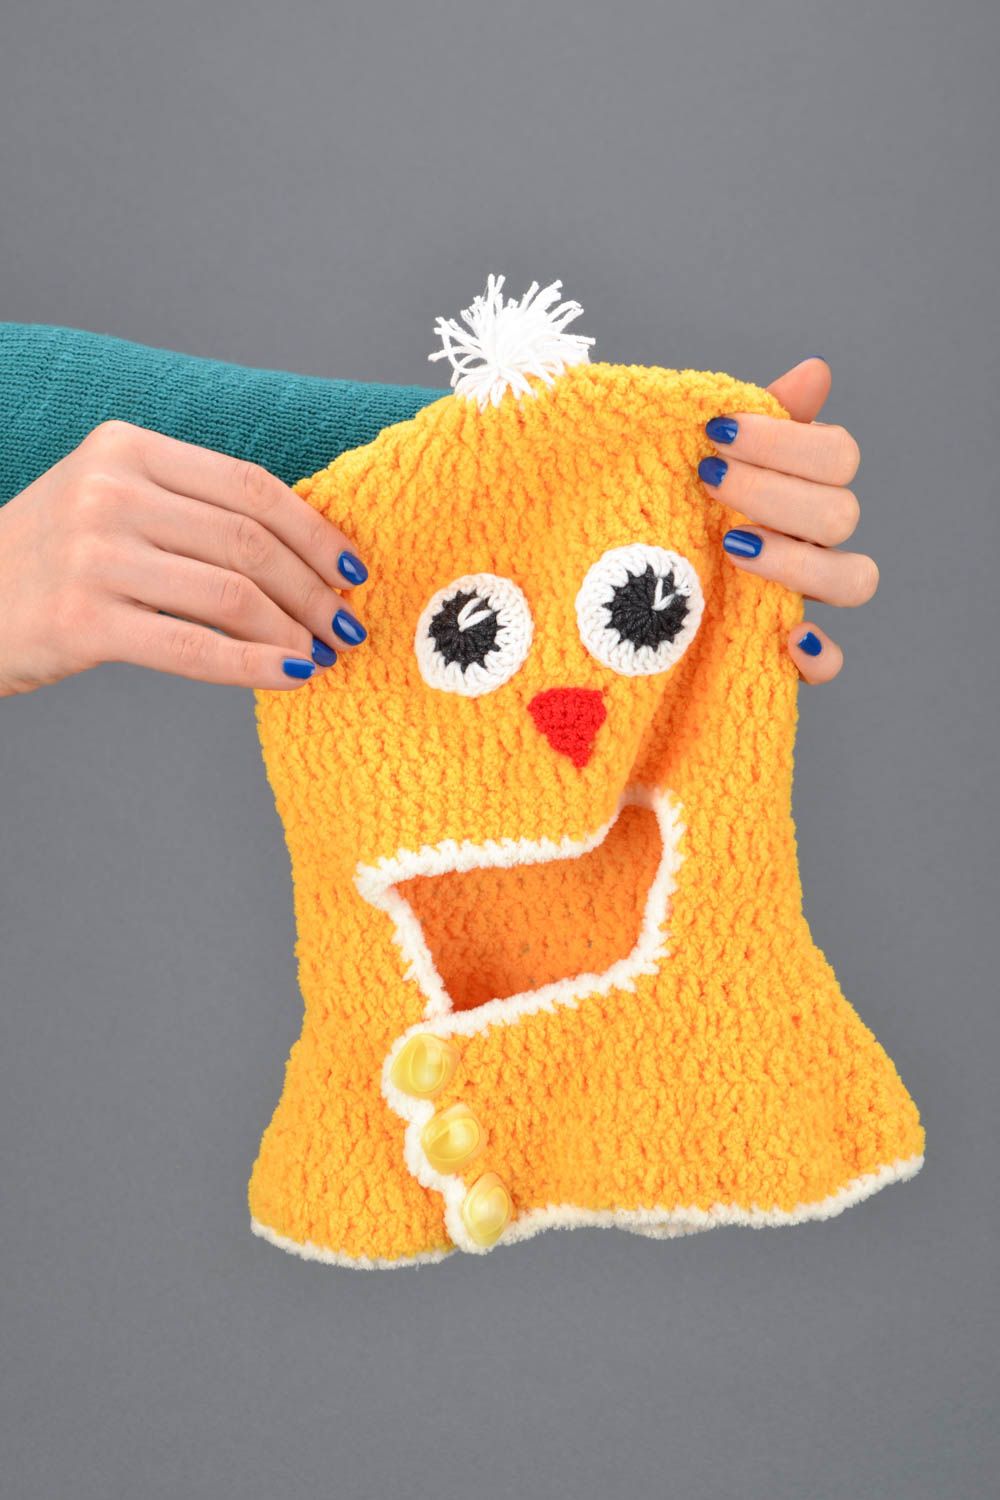 Crochet hat in the shape of chicken photo 2